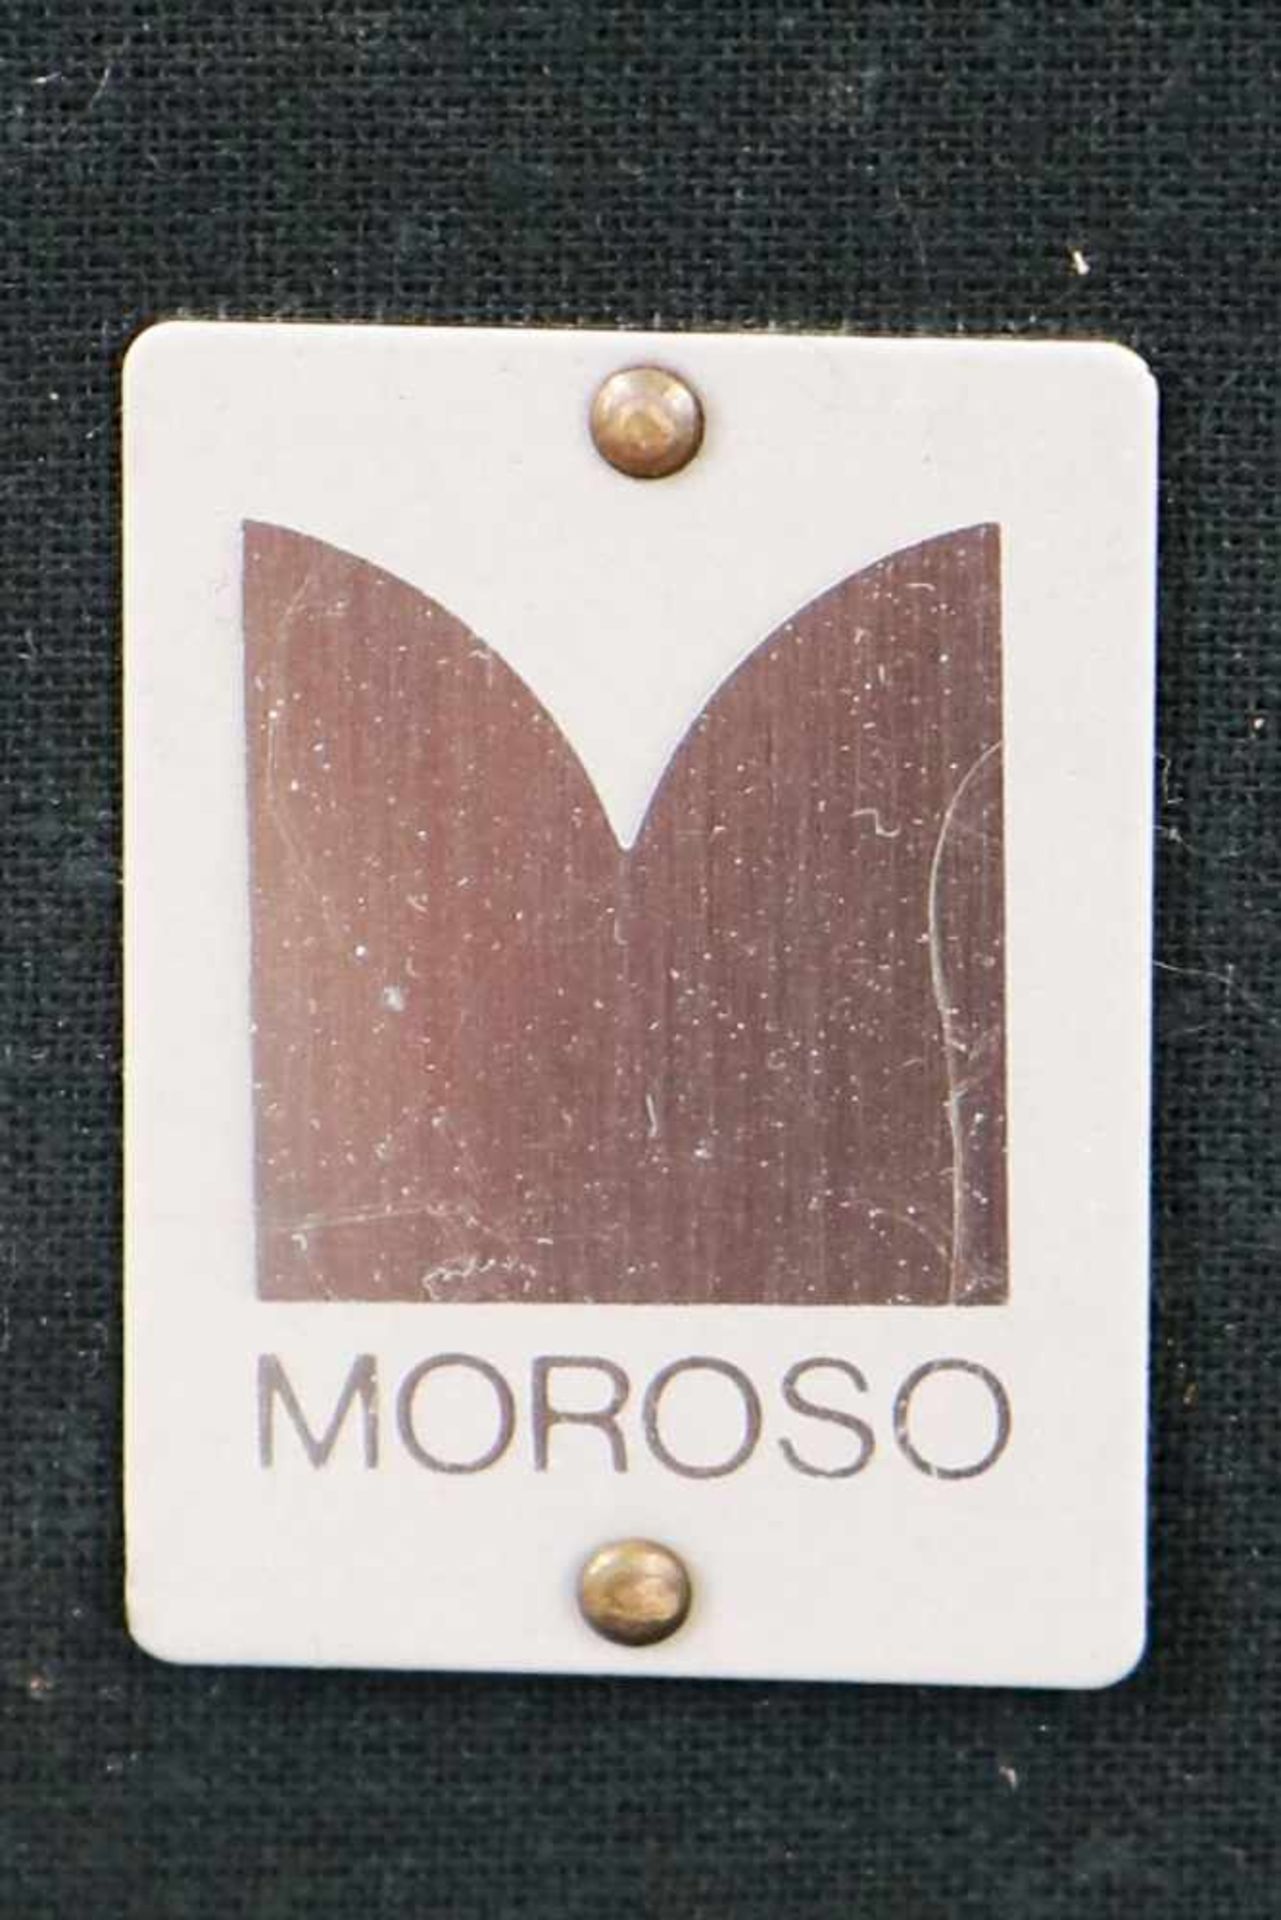 Paar MOROSO (Italia) Cocktailsesselallseitig schwarz beledert, Rundrücken, hufeisenförmige - Bild 2 aus 2